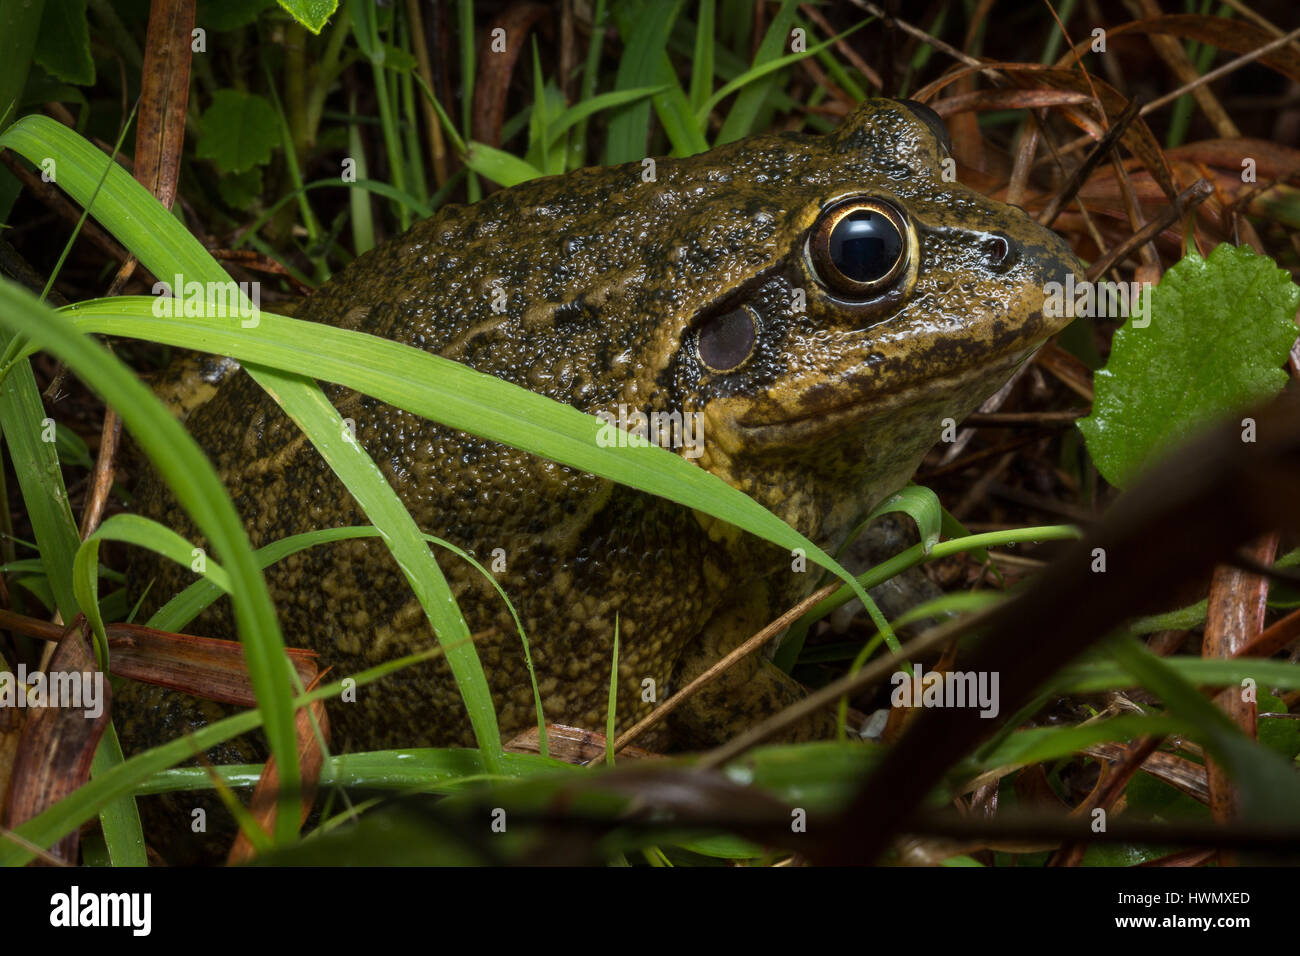 Northern Snapping Frog (Cyclorana australis) Stock Photo